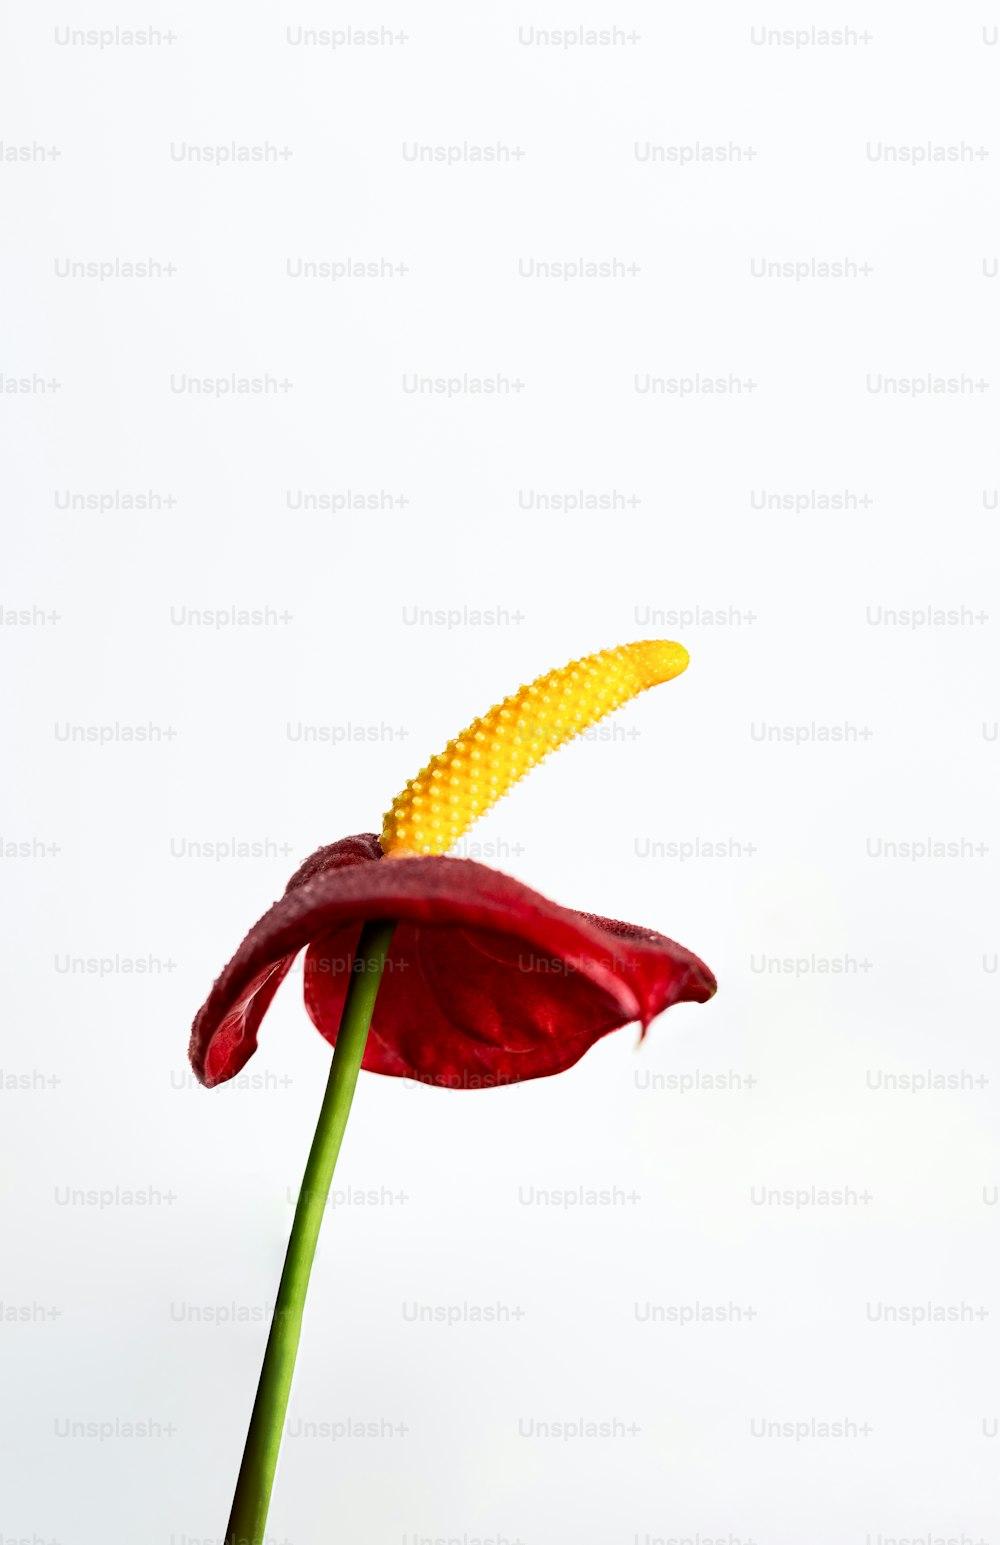 Una sola flor roja con un tallo amarillo